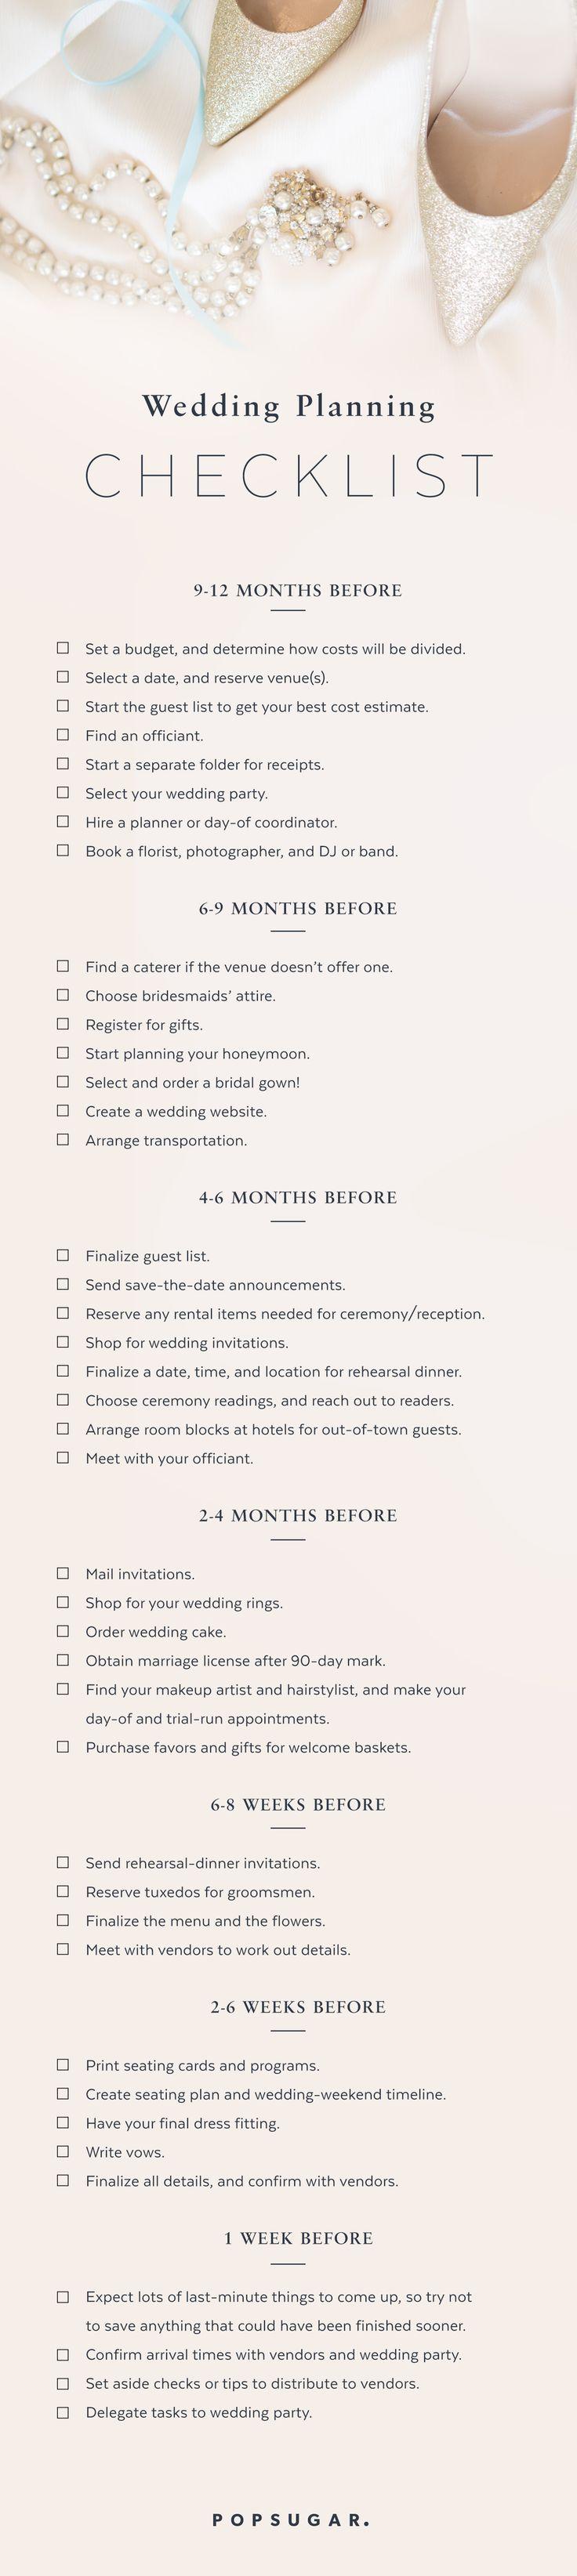 زفاف - Download The Ultimate Wedding Planning Checklist!